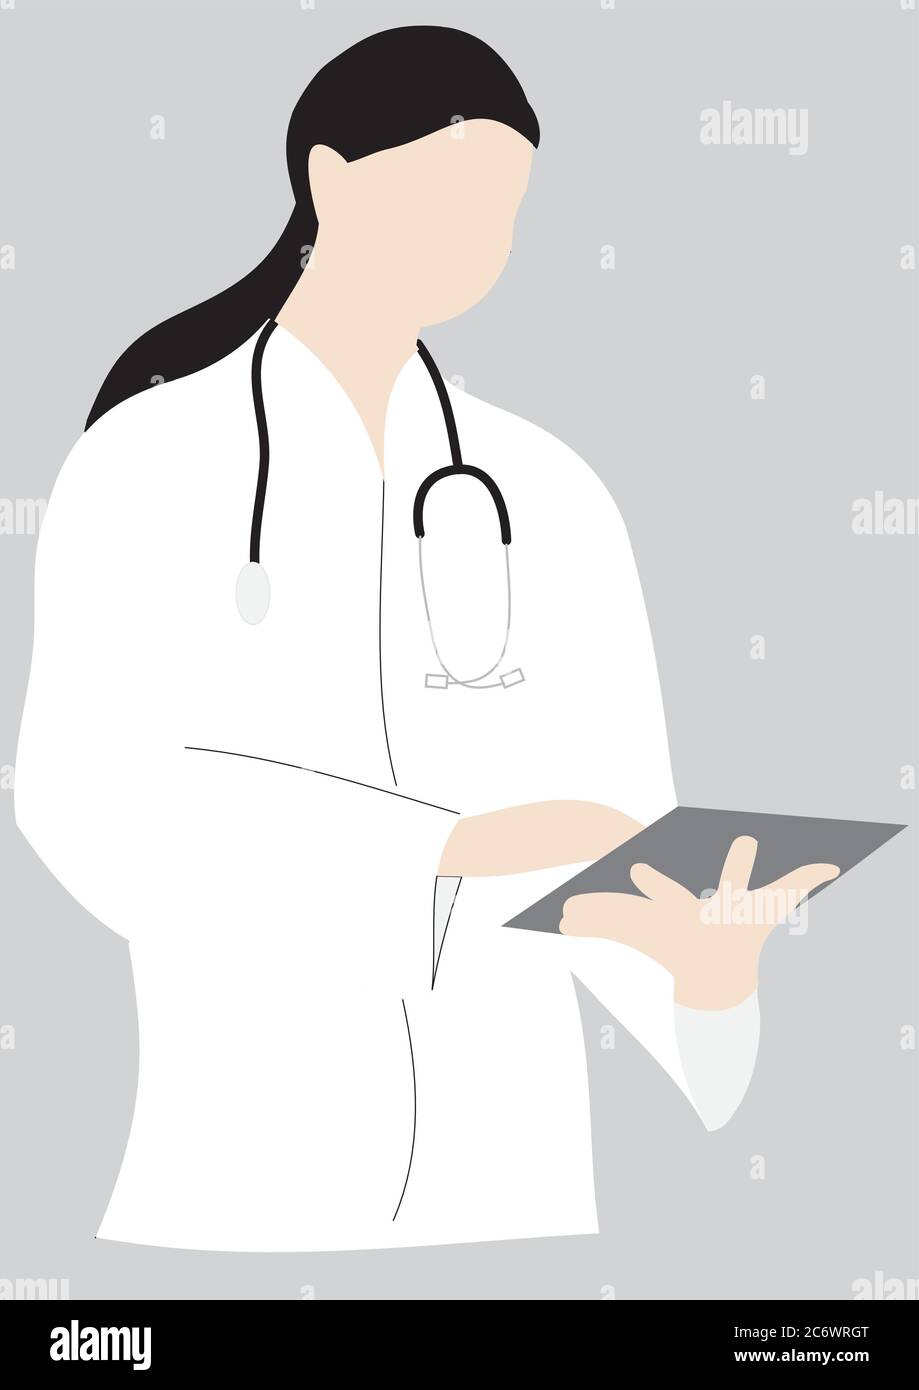 https://c8.alamy.com/comp/2C6WRGT/vector-illustration-of-a-female-doctor-reading-ipad-tablet-computer-caucasian-light-skin-tone-uk-2020-2C6WRGT.jpg